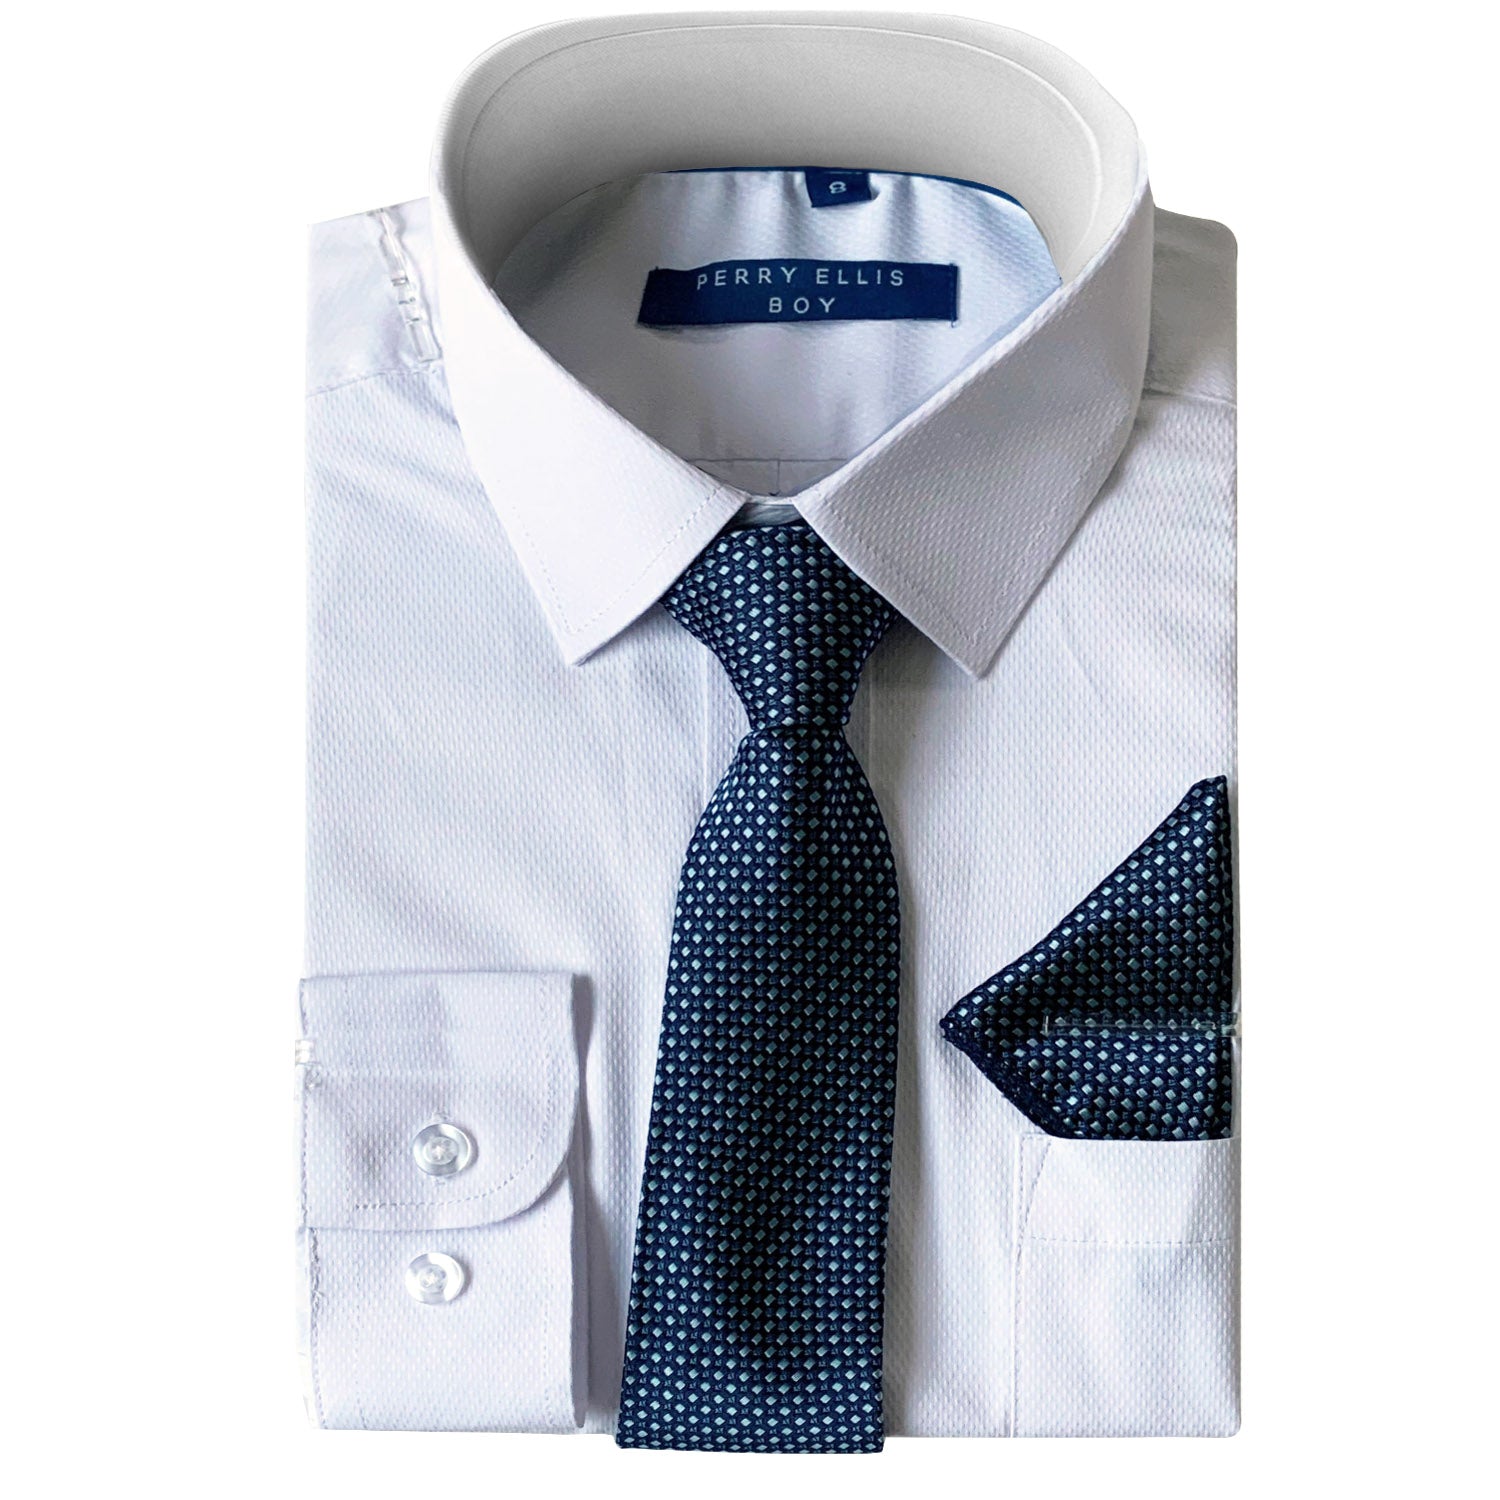 Perry Ellis Boys Dress Shirts w Indigo Tie Solid Shirts w Patterned Tie